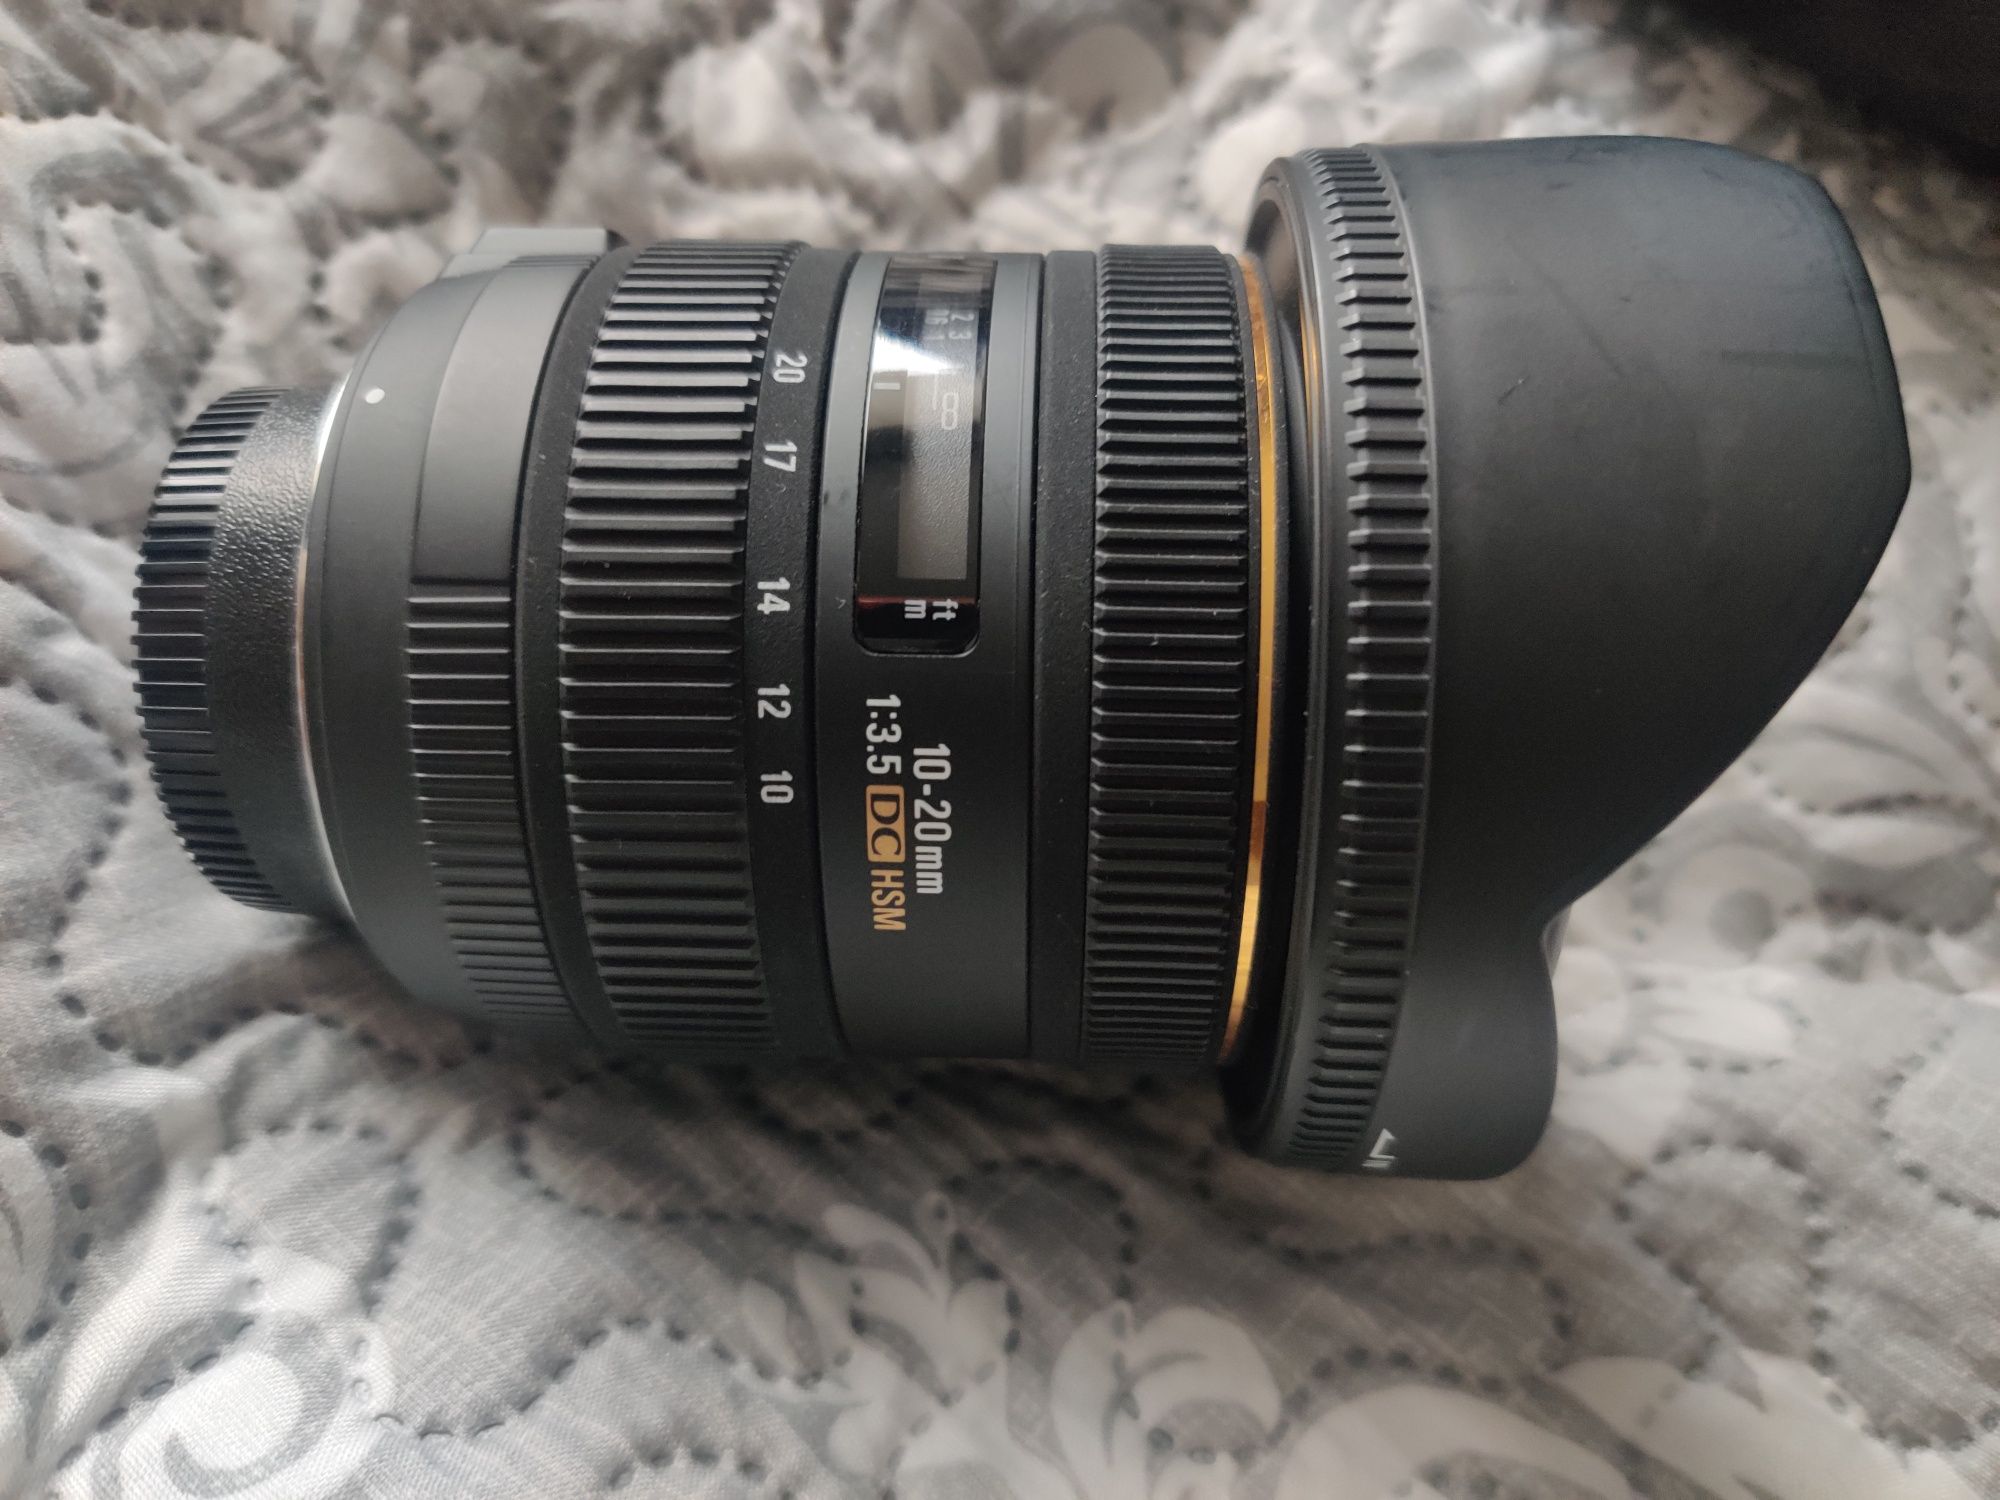 De vanzare obiectivul Sigma 10-20 f3.5 montura Nikon Dx.